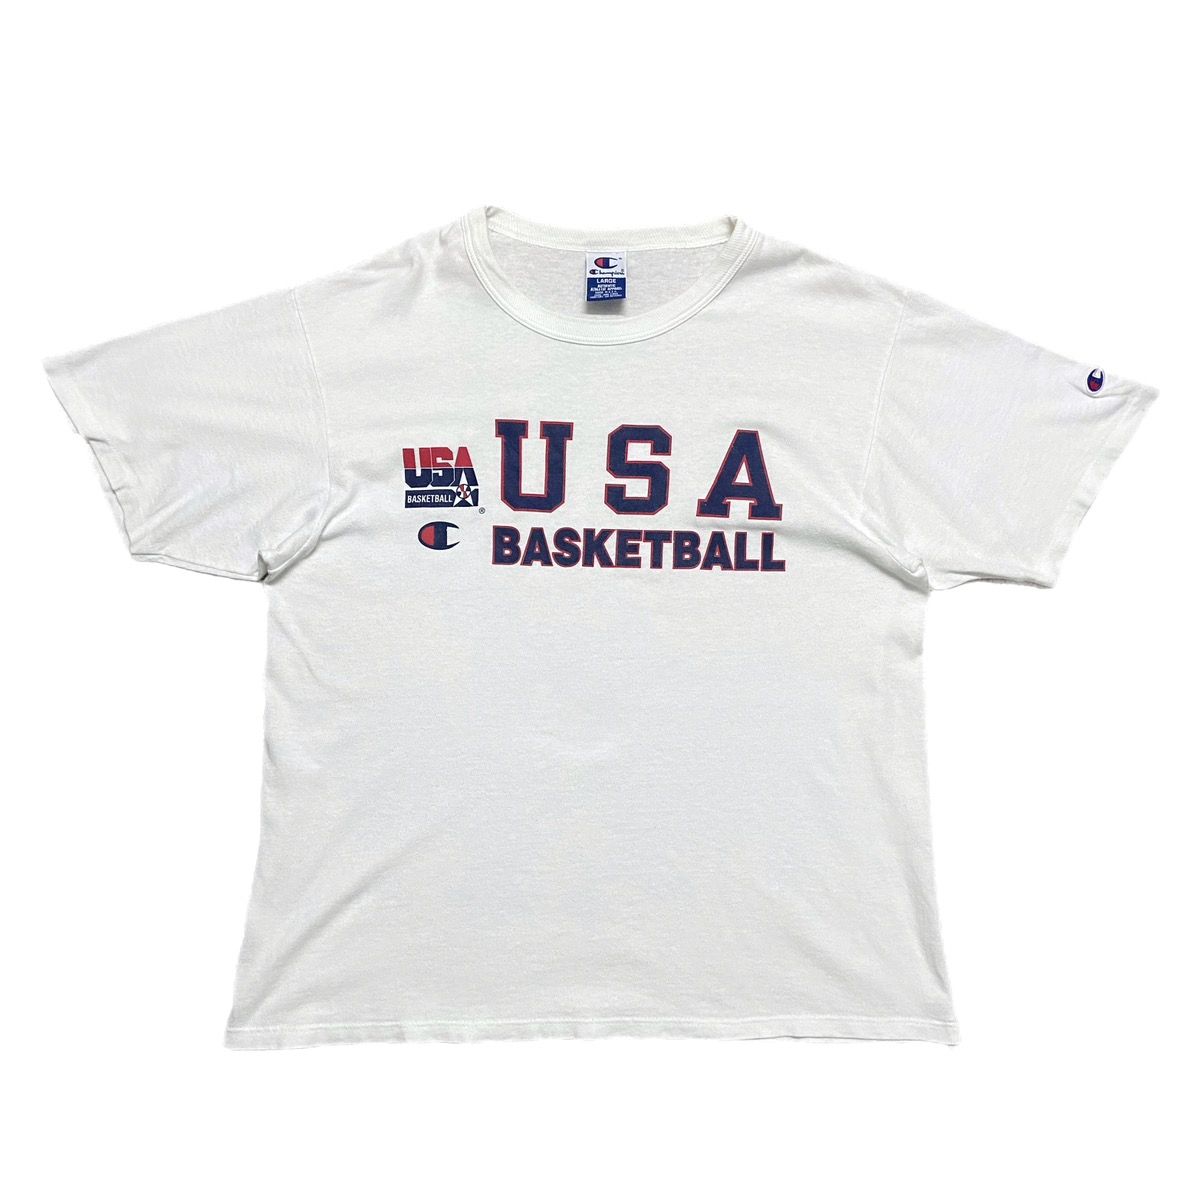 Vintage USA Basketball Team Tshirt - 1